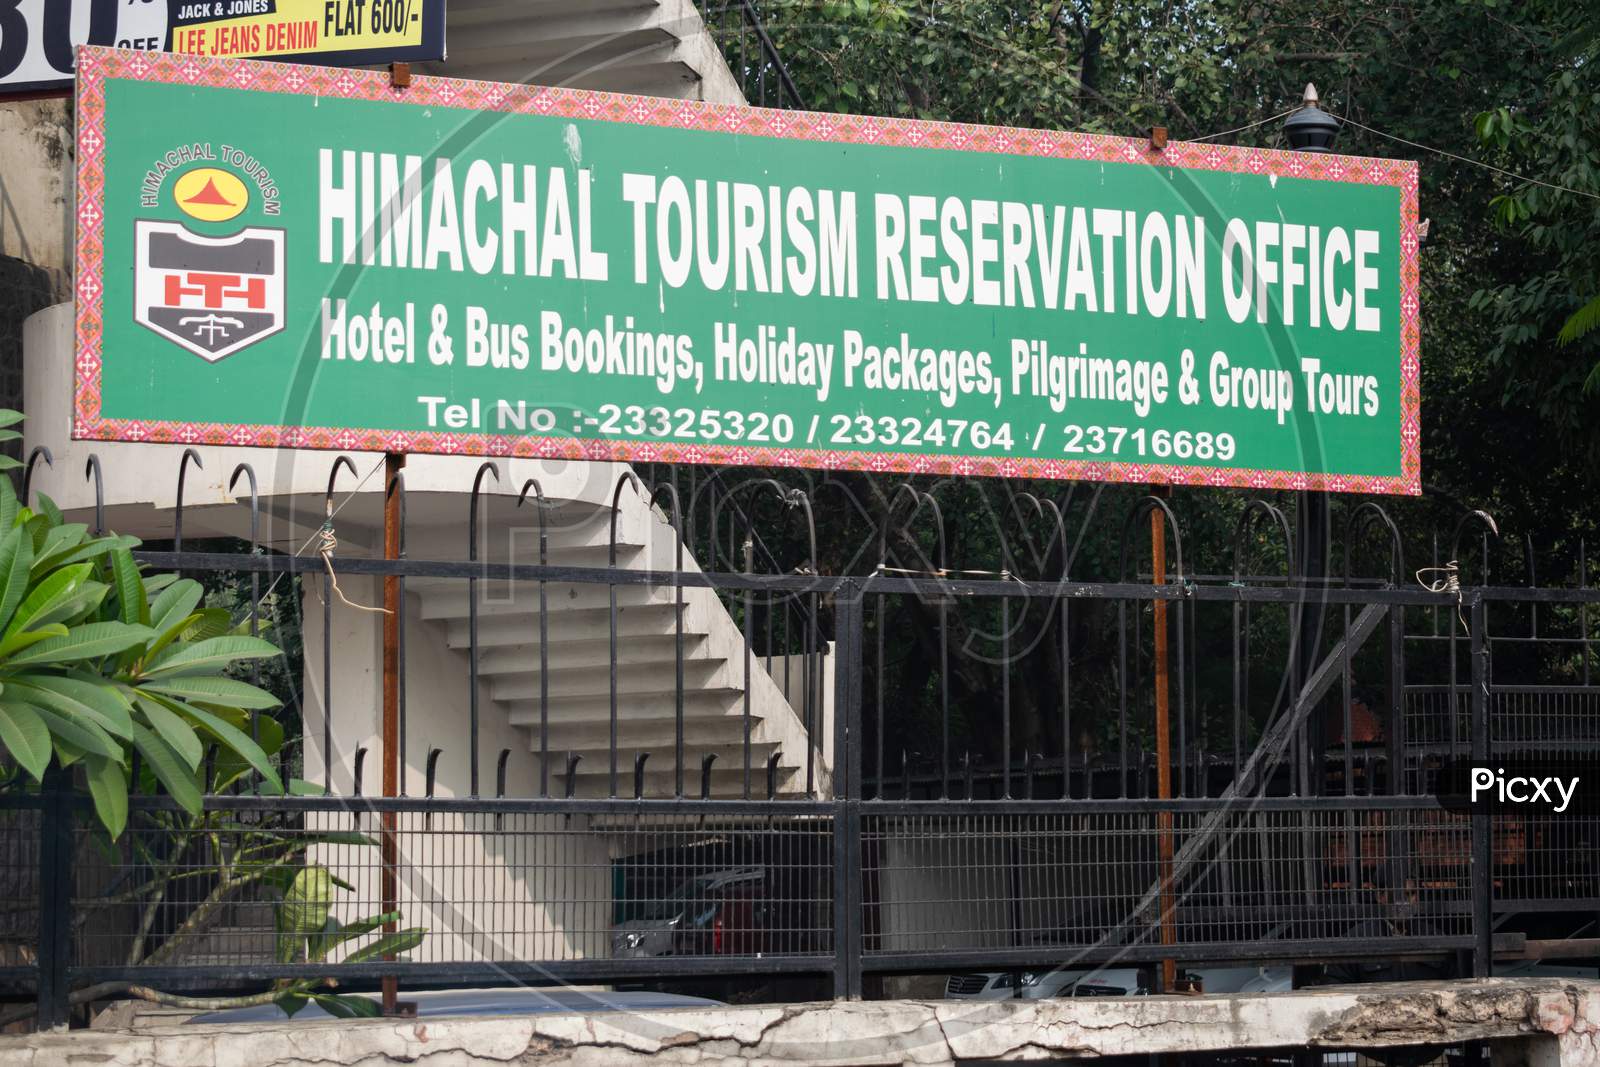 Himachal Tourism Reservation office Sign board